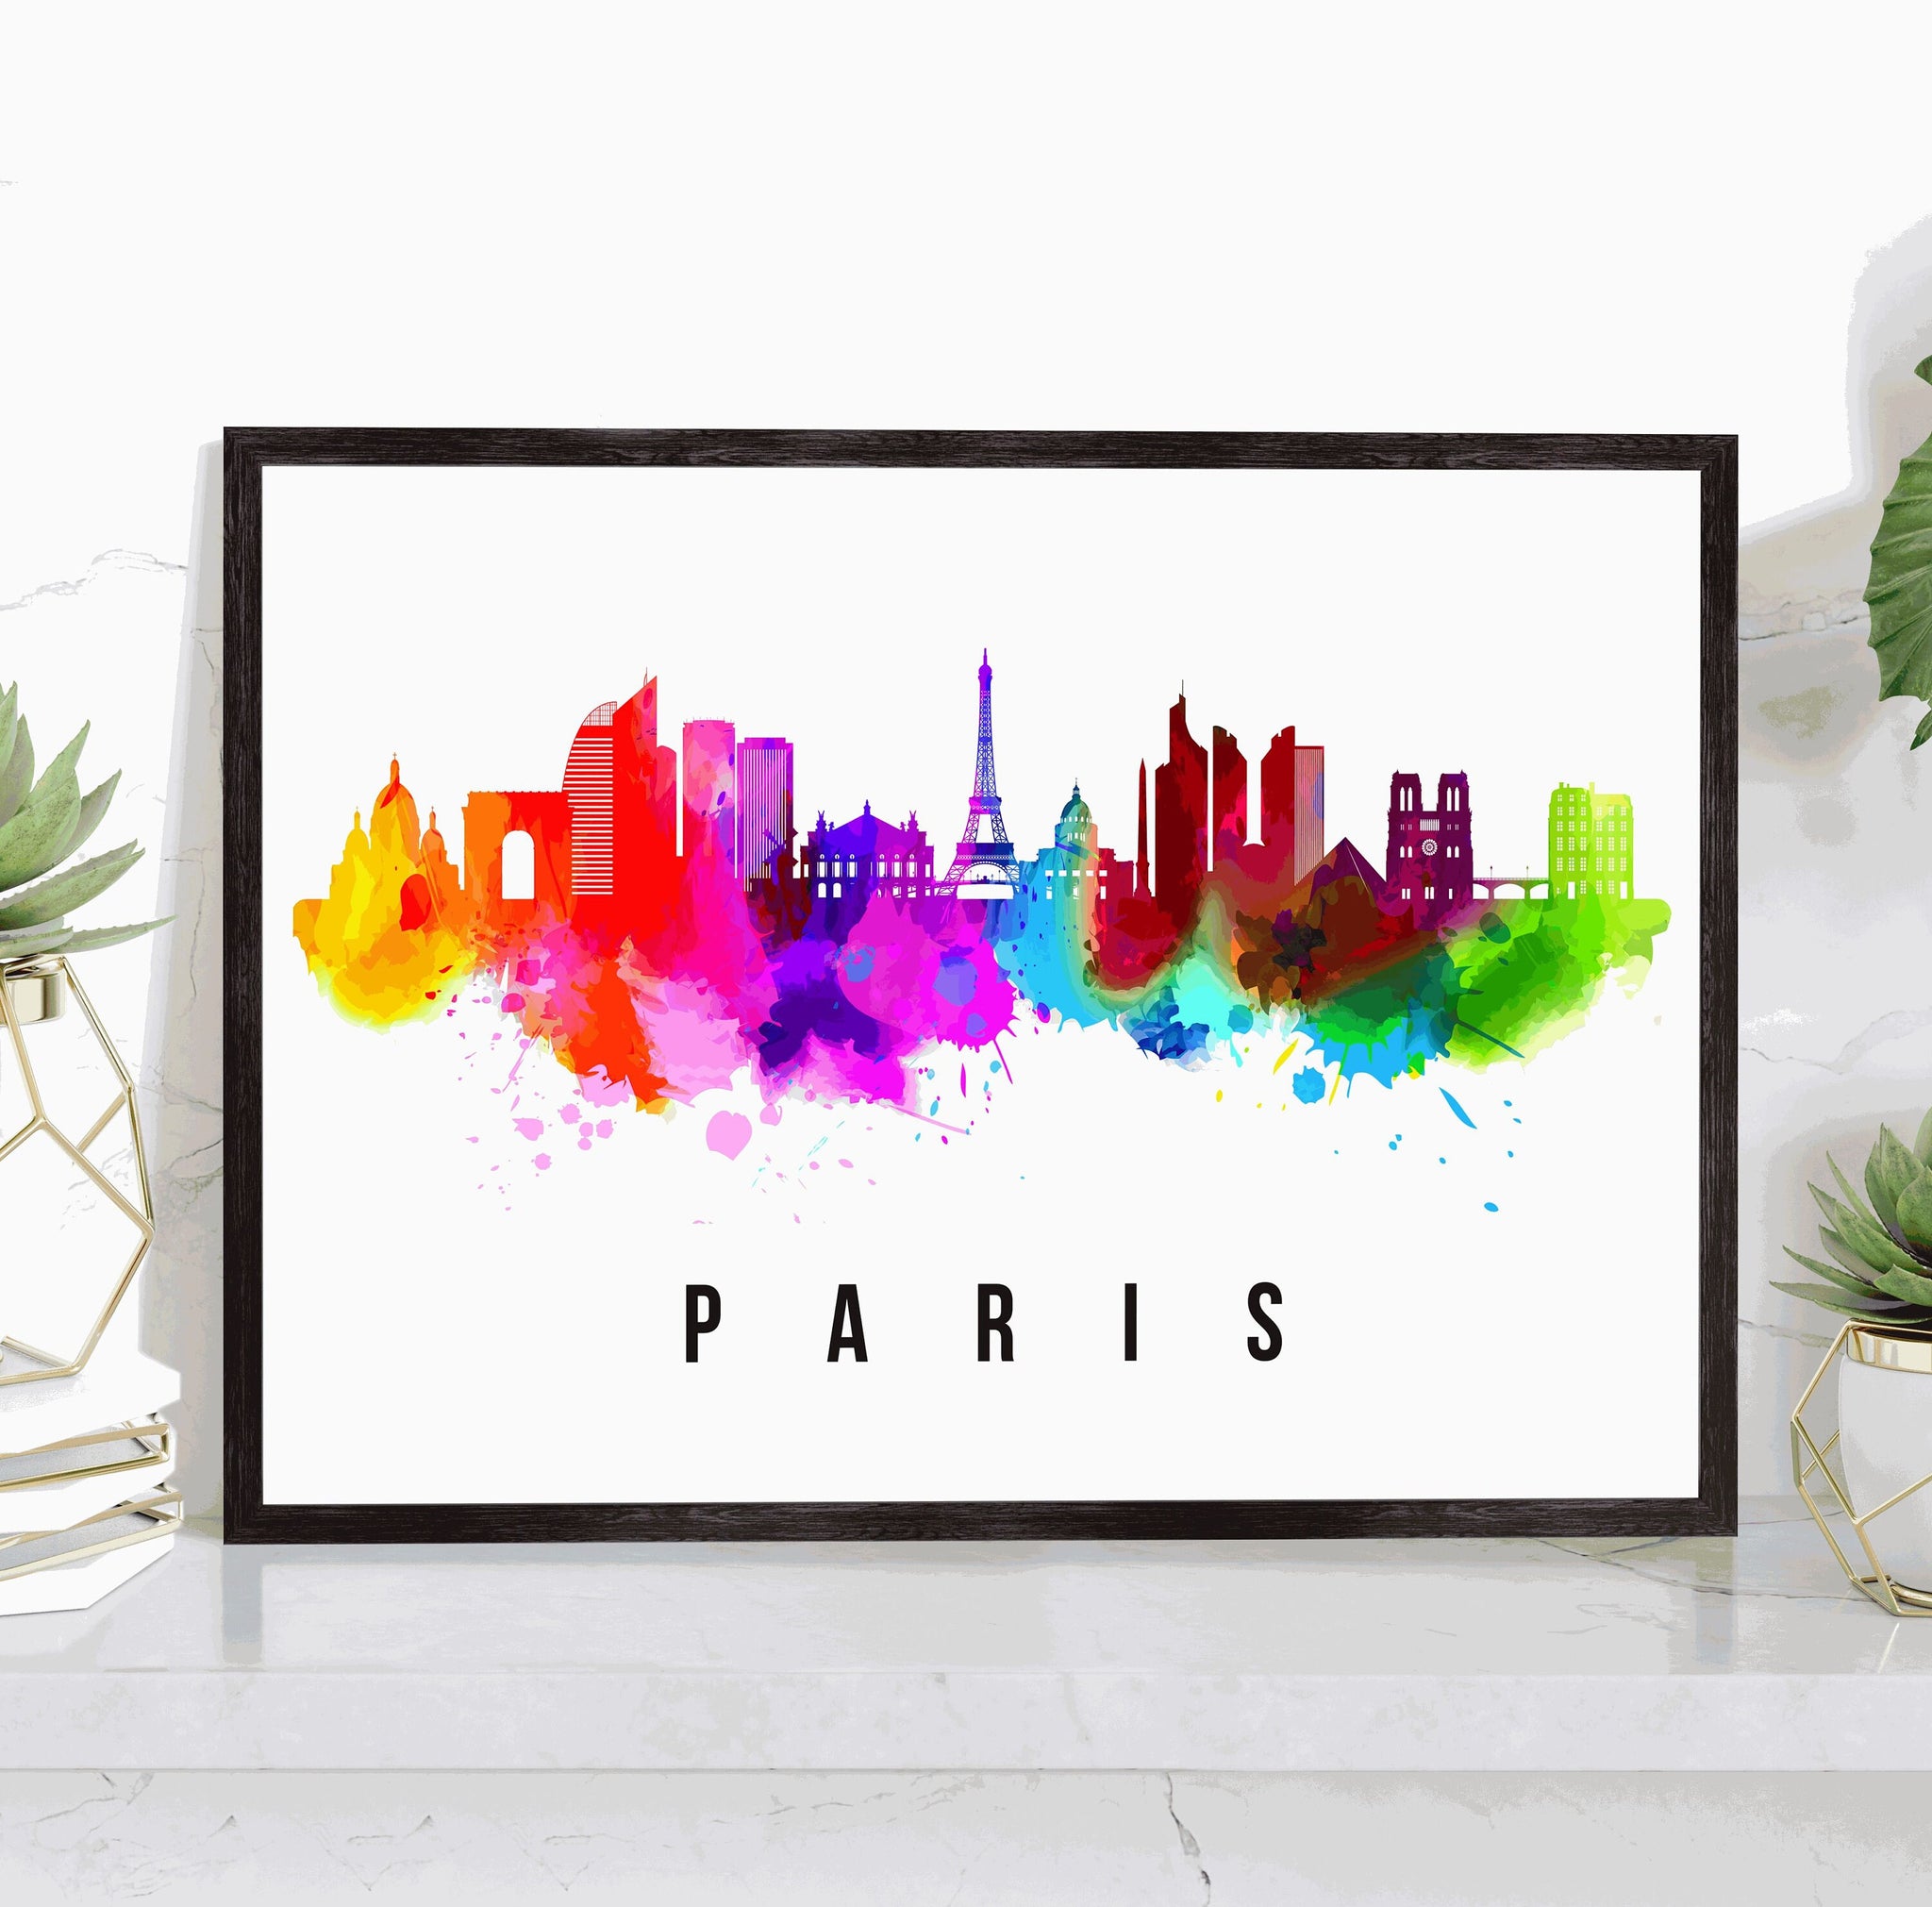 PARIS - FRANCE Poster, Skyline Poster Cityscape and Landmark Paris Illustration Home Wall Art, Office Decor